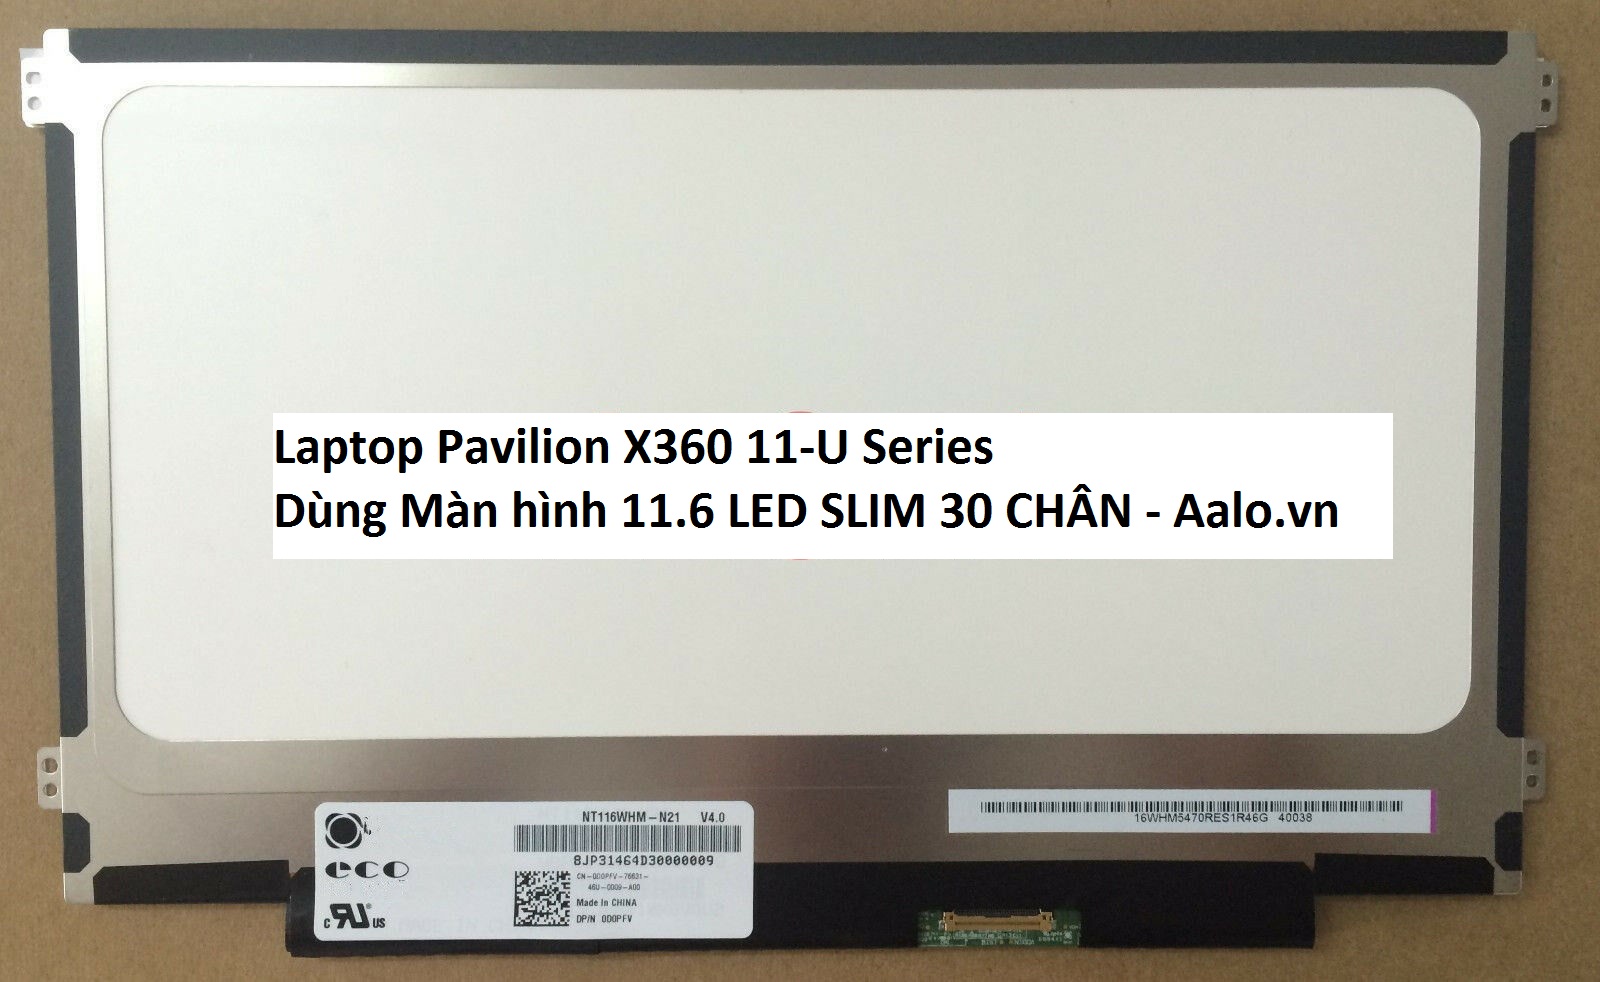 Màn hình Laptop Pavilion X360 11-U Series - Aalo.vn